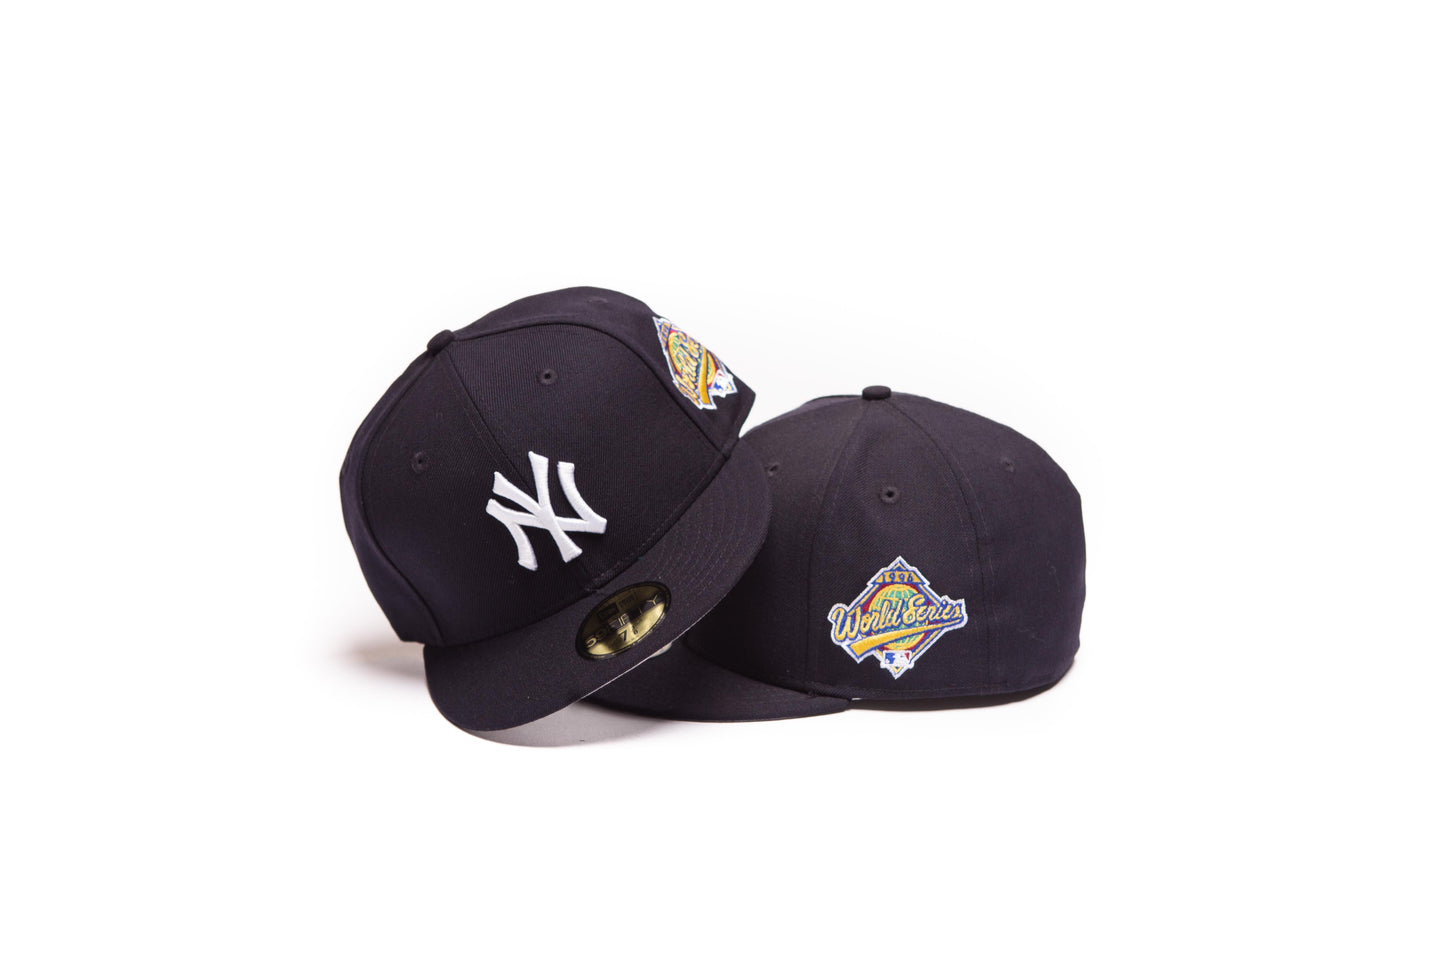 New Era New York Yankees Black On Black Snapback Cap 9fifty Limited Edition